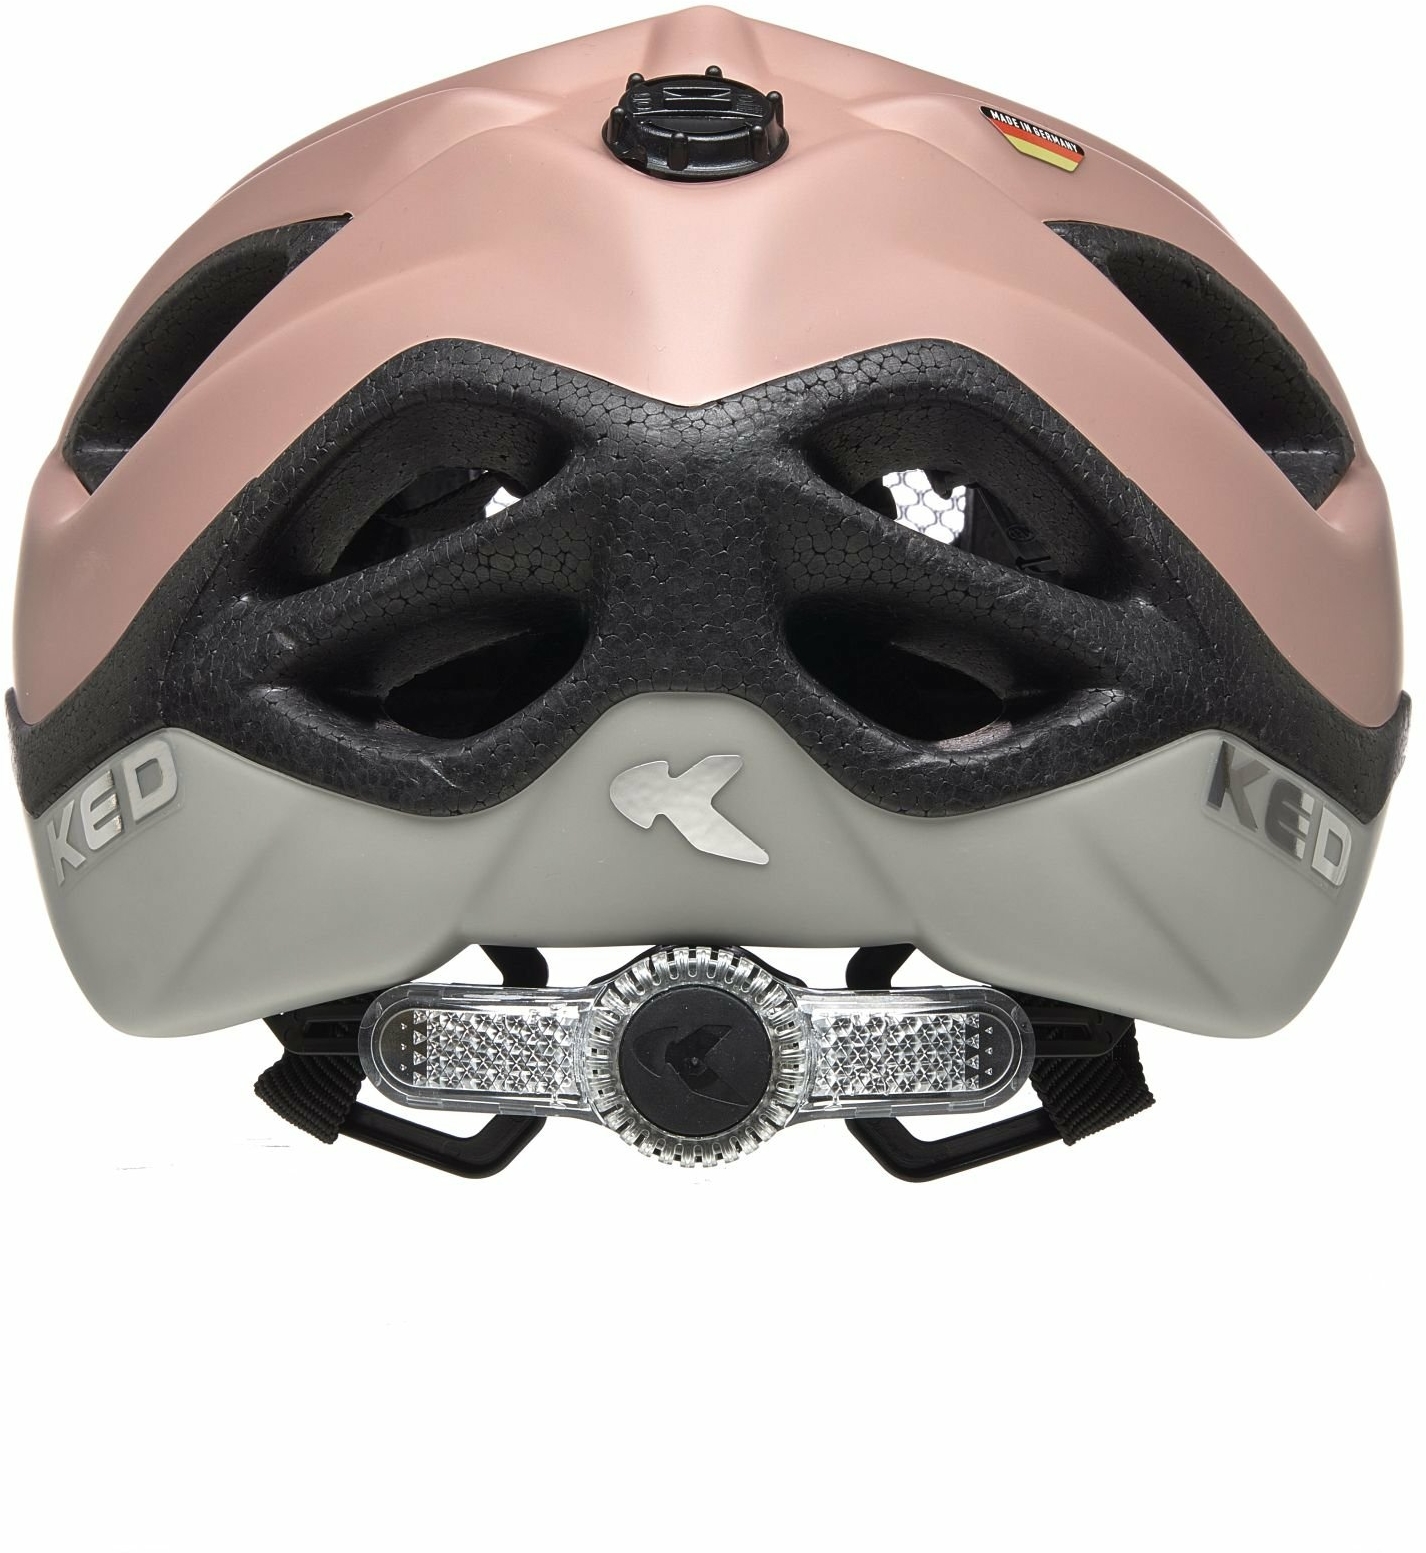 KED Fahrrad-helm Certus pro